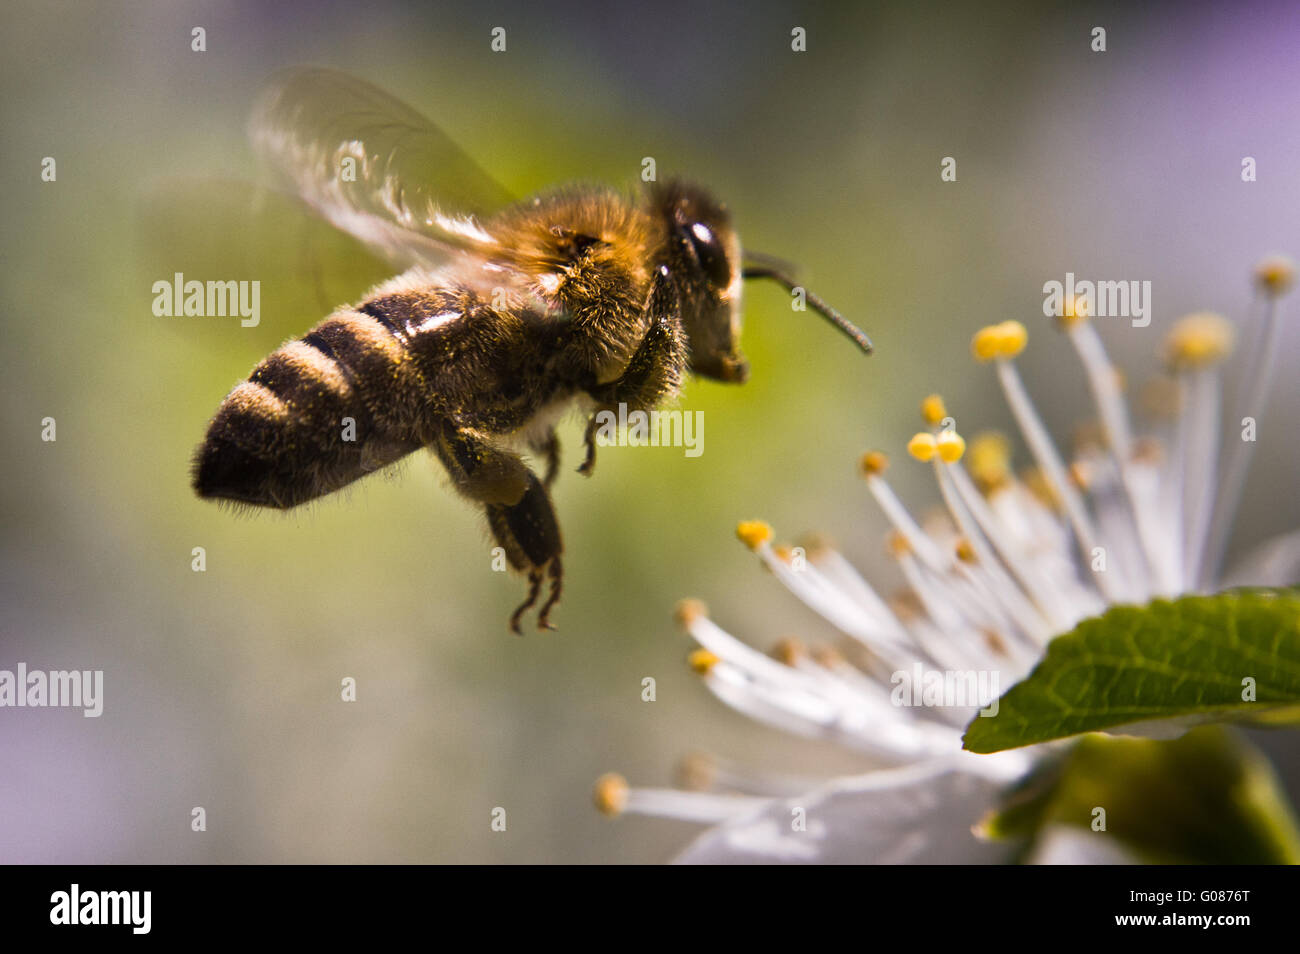 European Honey Bee pollinating flower. Stock Photo